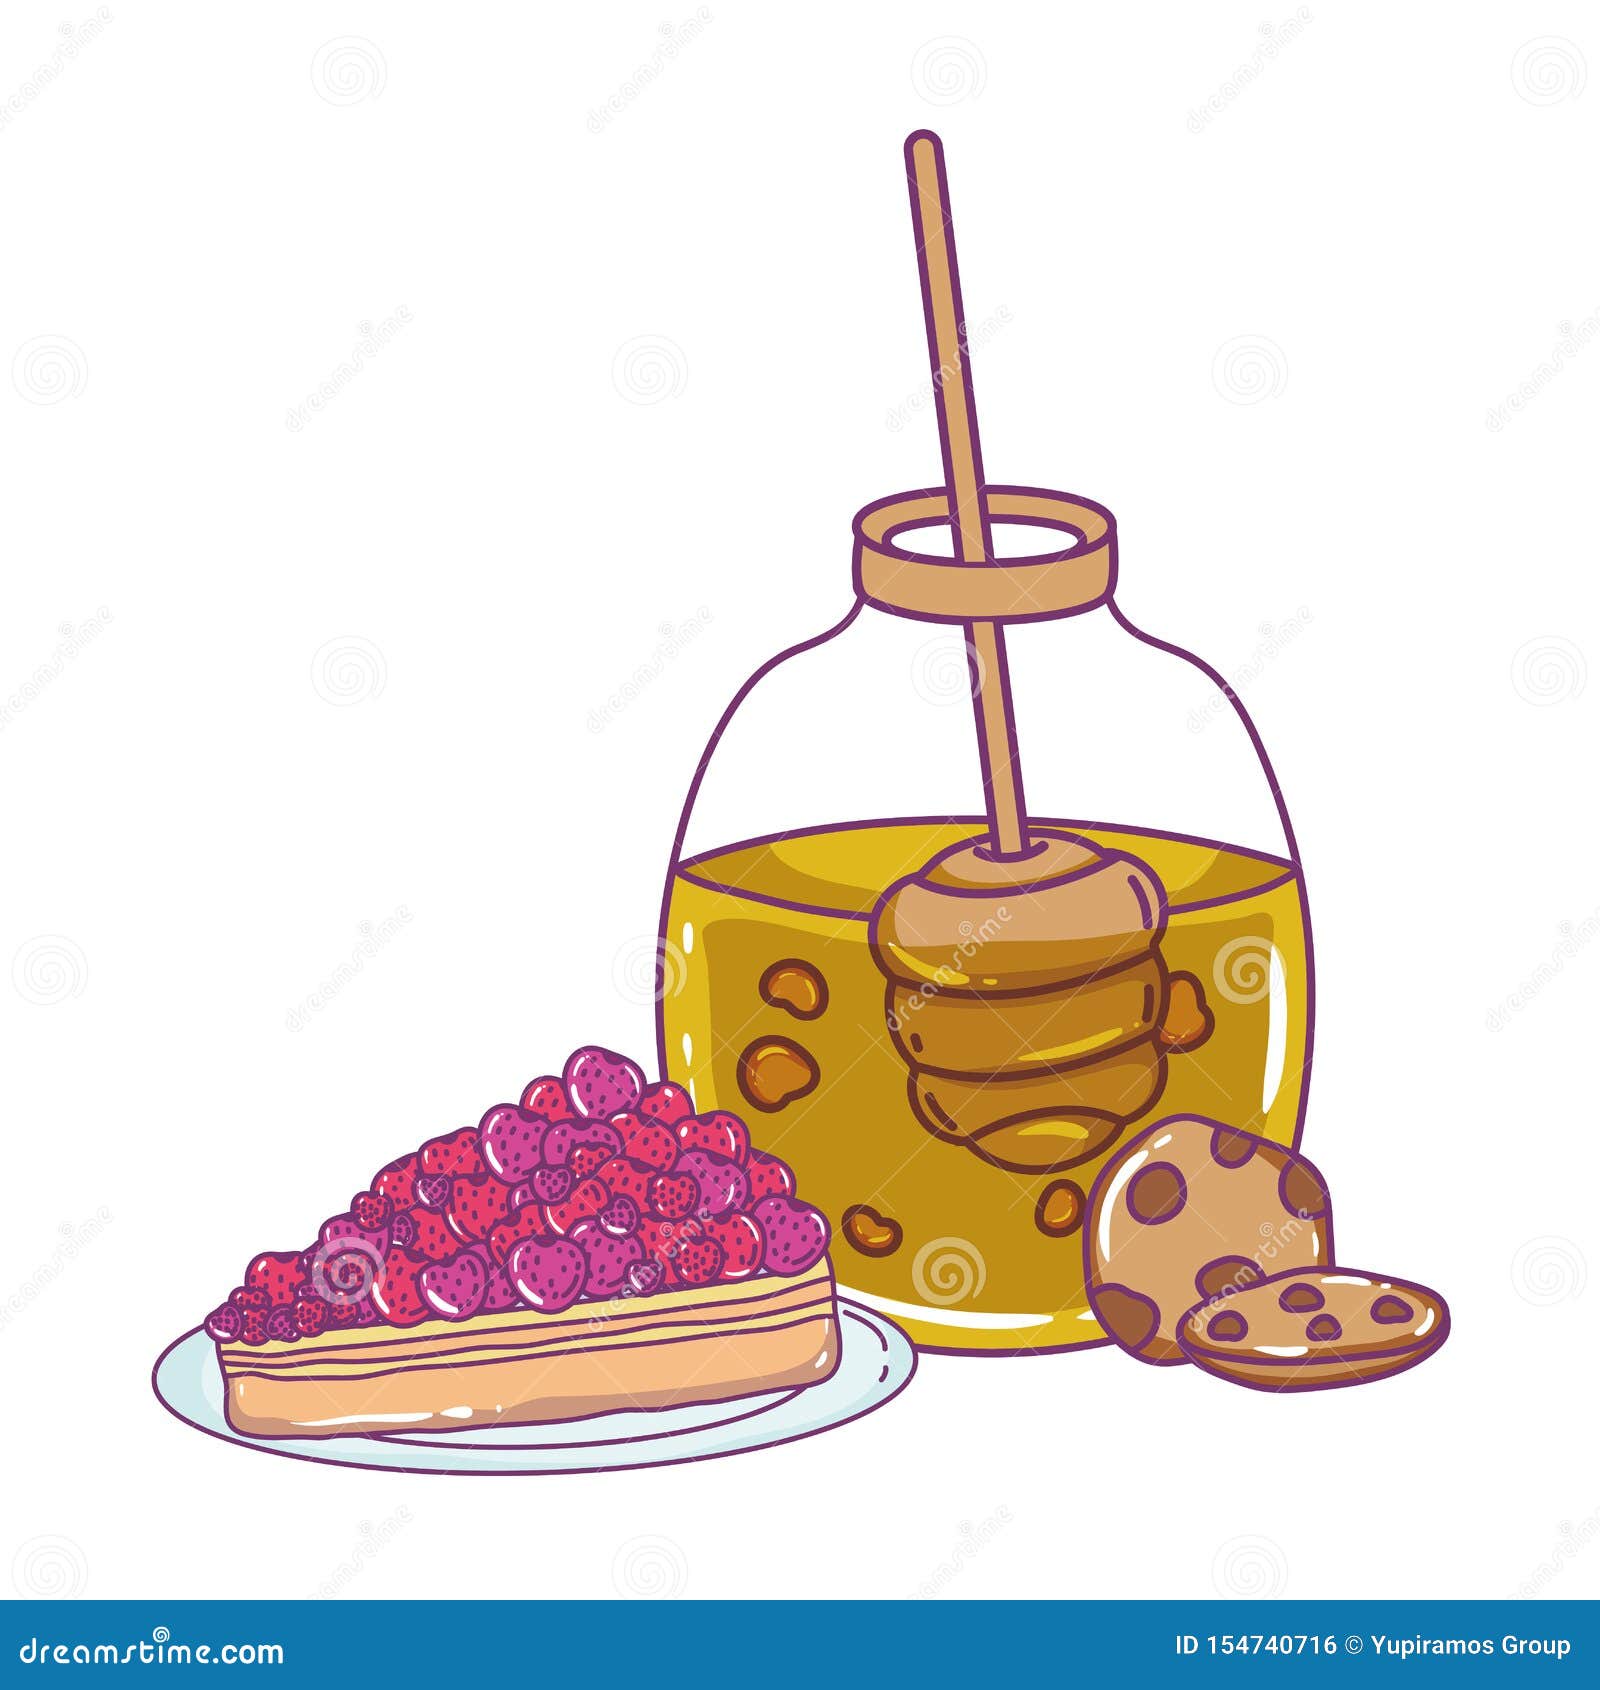 https://thumbs.dreamstime.com/z/isolated-honey-jar-design-vector-illustration-healthy-organic-food-sweet-liquid-natural-theme-154740716.jpg